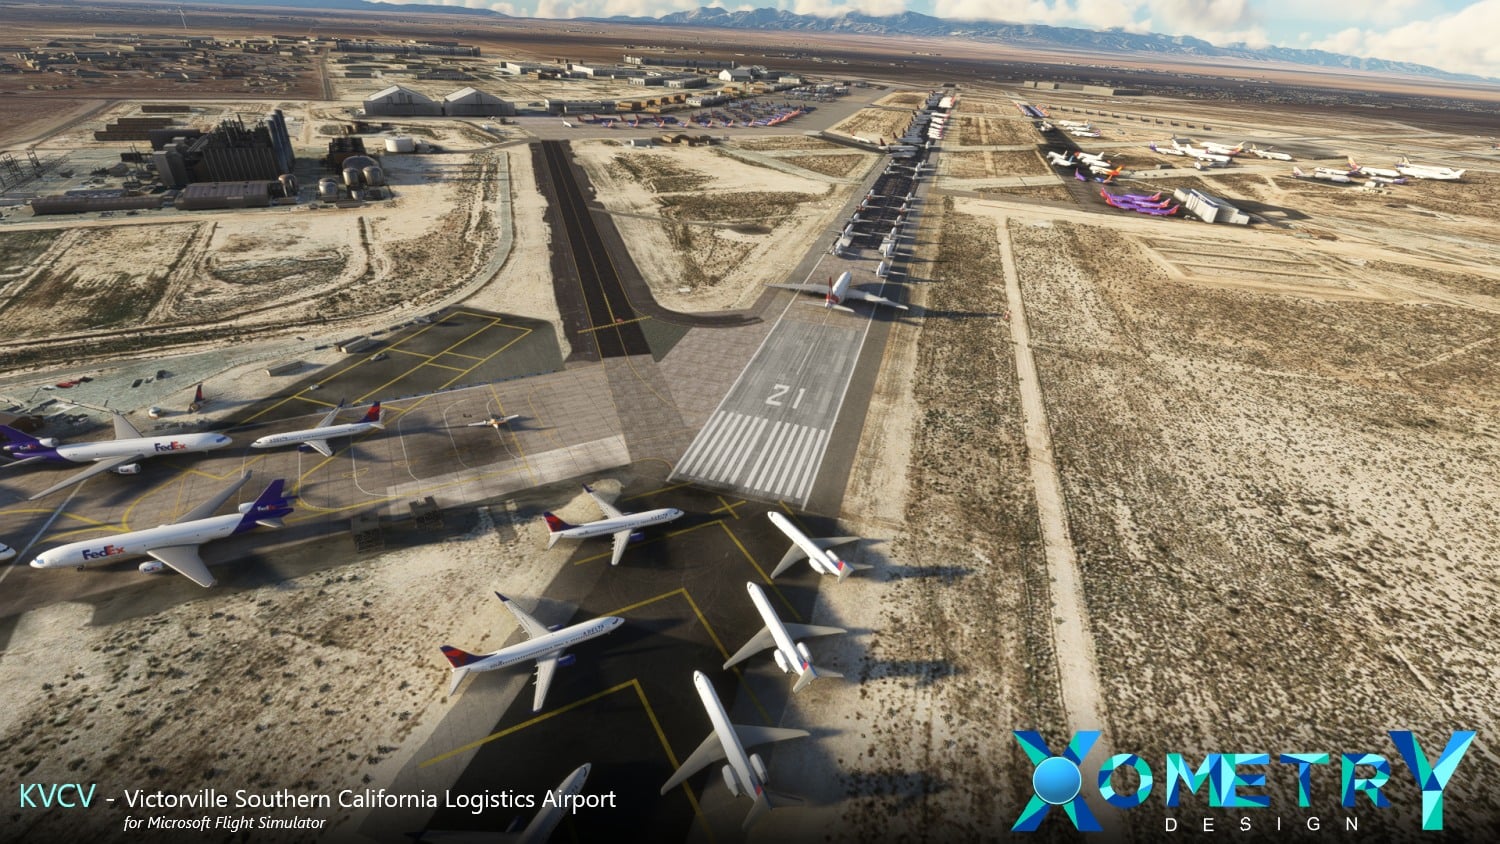 Xometry Design Announces Victorville for MSFS - Microsoft Flight Simulator, Uncategorized, WF Scenery Studio